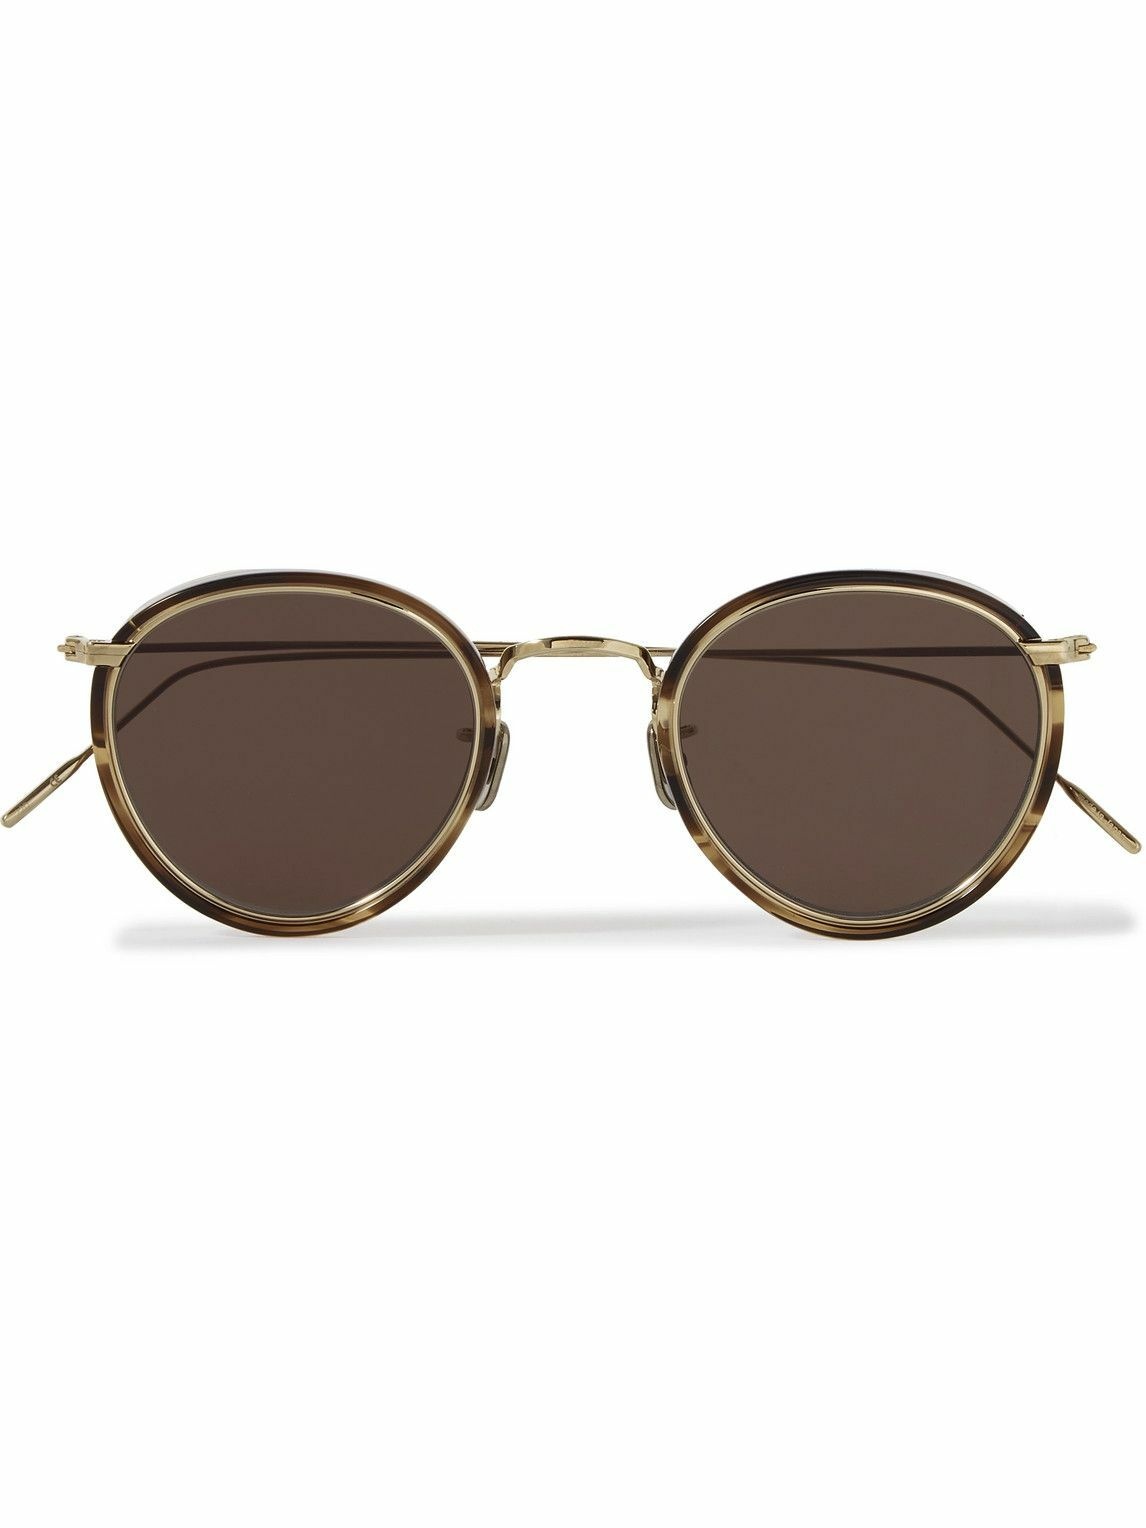 Photo: Eyevan 7285 - Round-Frame Acetate and Silver-Tone Sunglasses